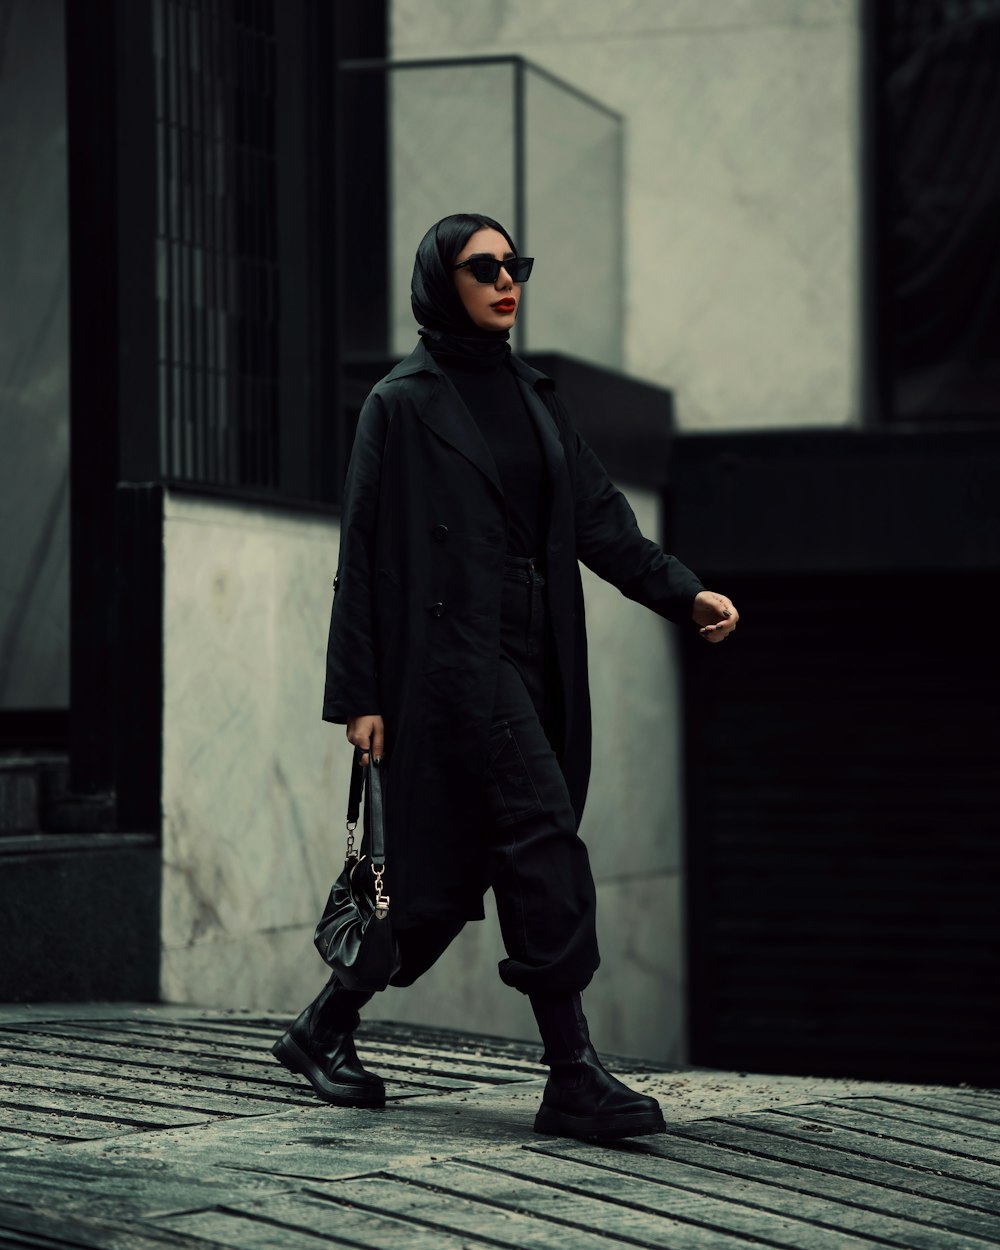 a woman walking down a street holding a handbag